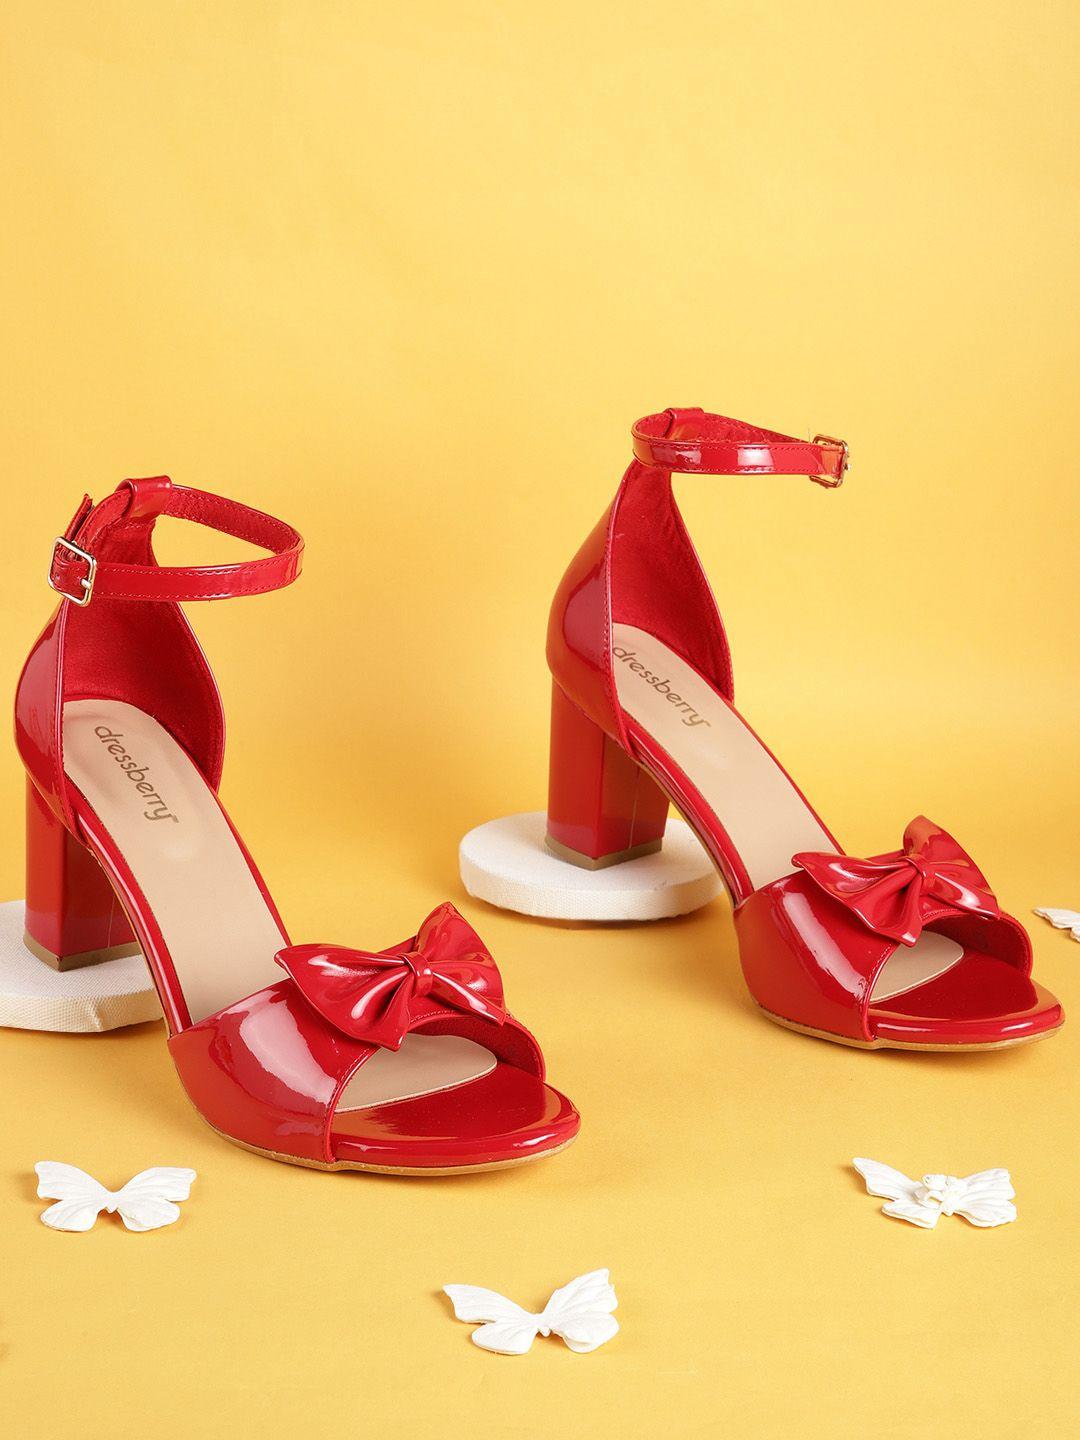 dressberry-women-mid-top-block-heel-sandals-with-bow-detail